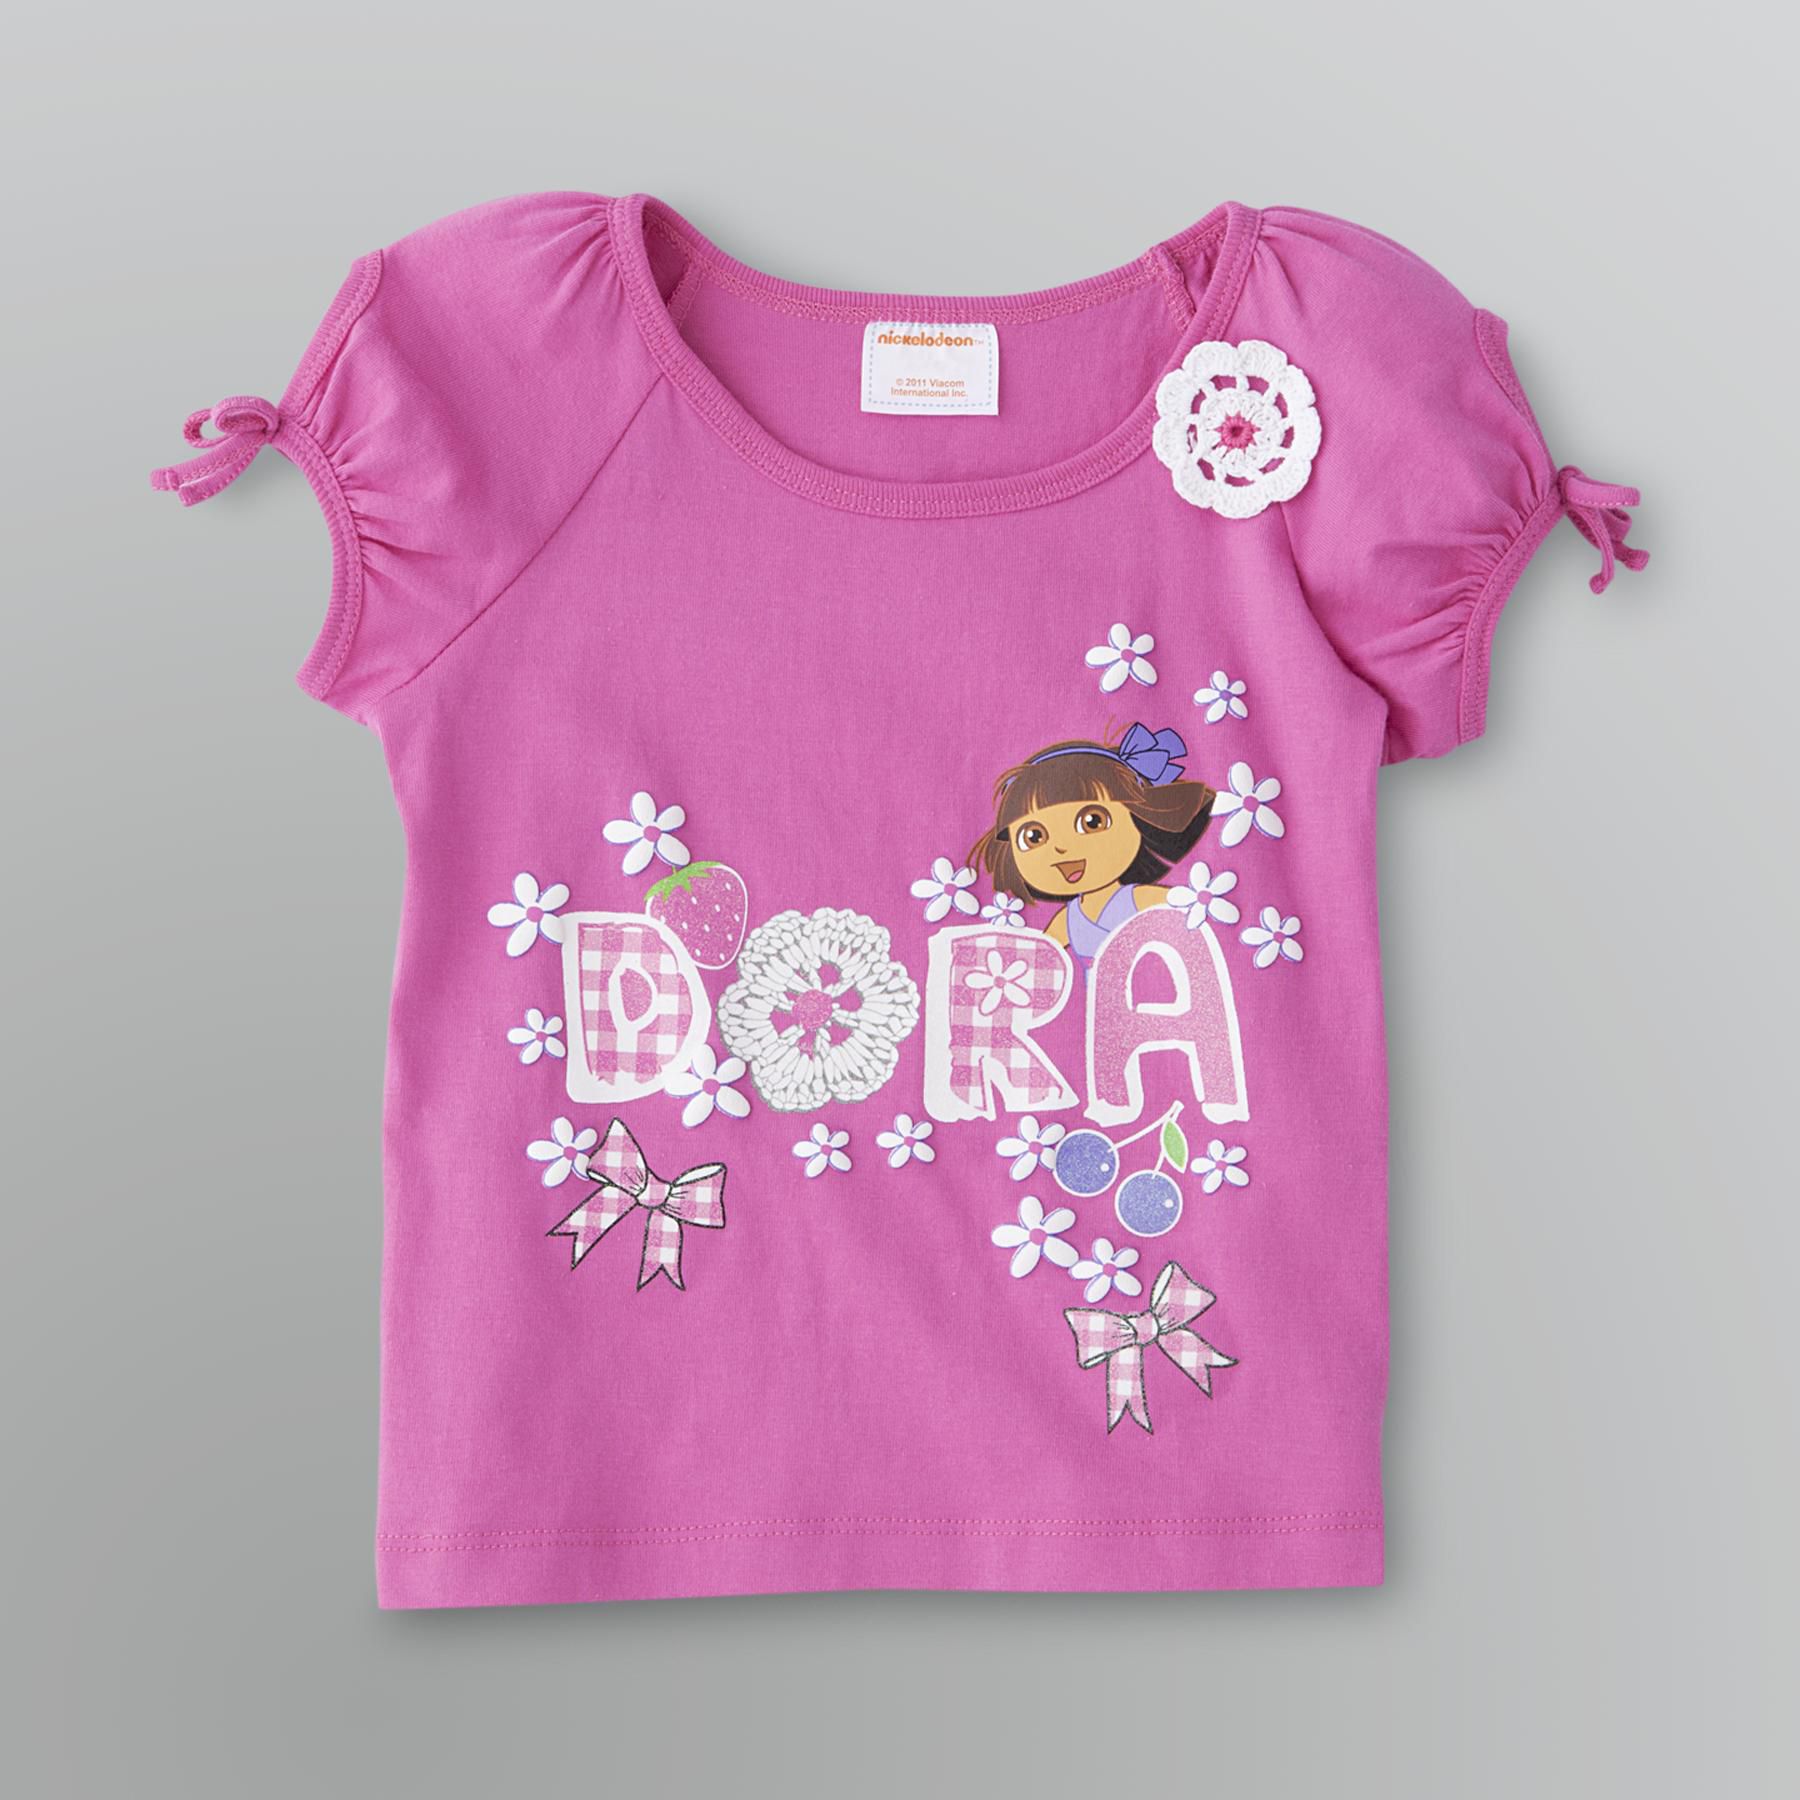 Nickelodeon Girl's Dora the Explorer Short Sleeve T-Shirt